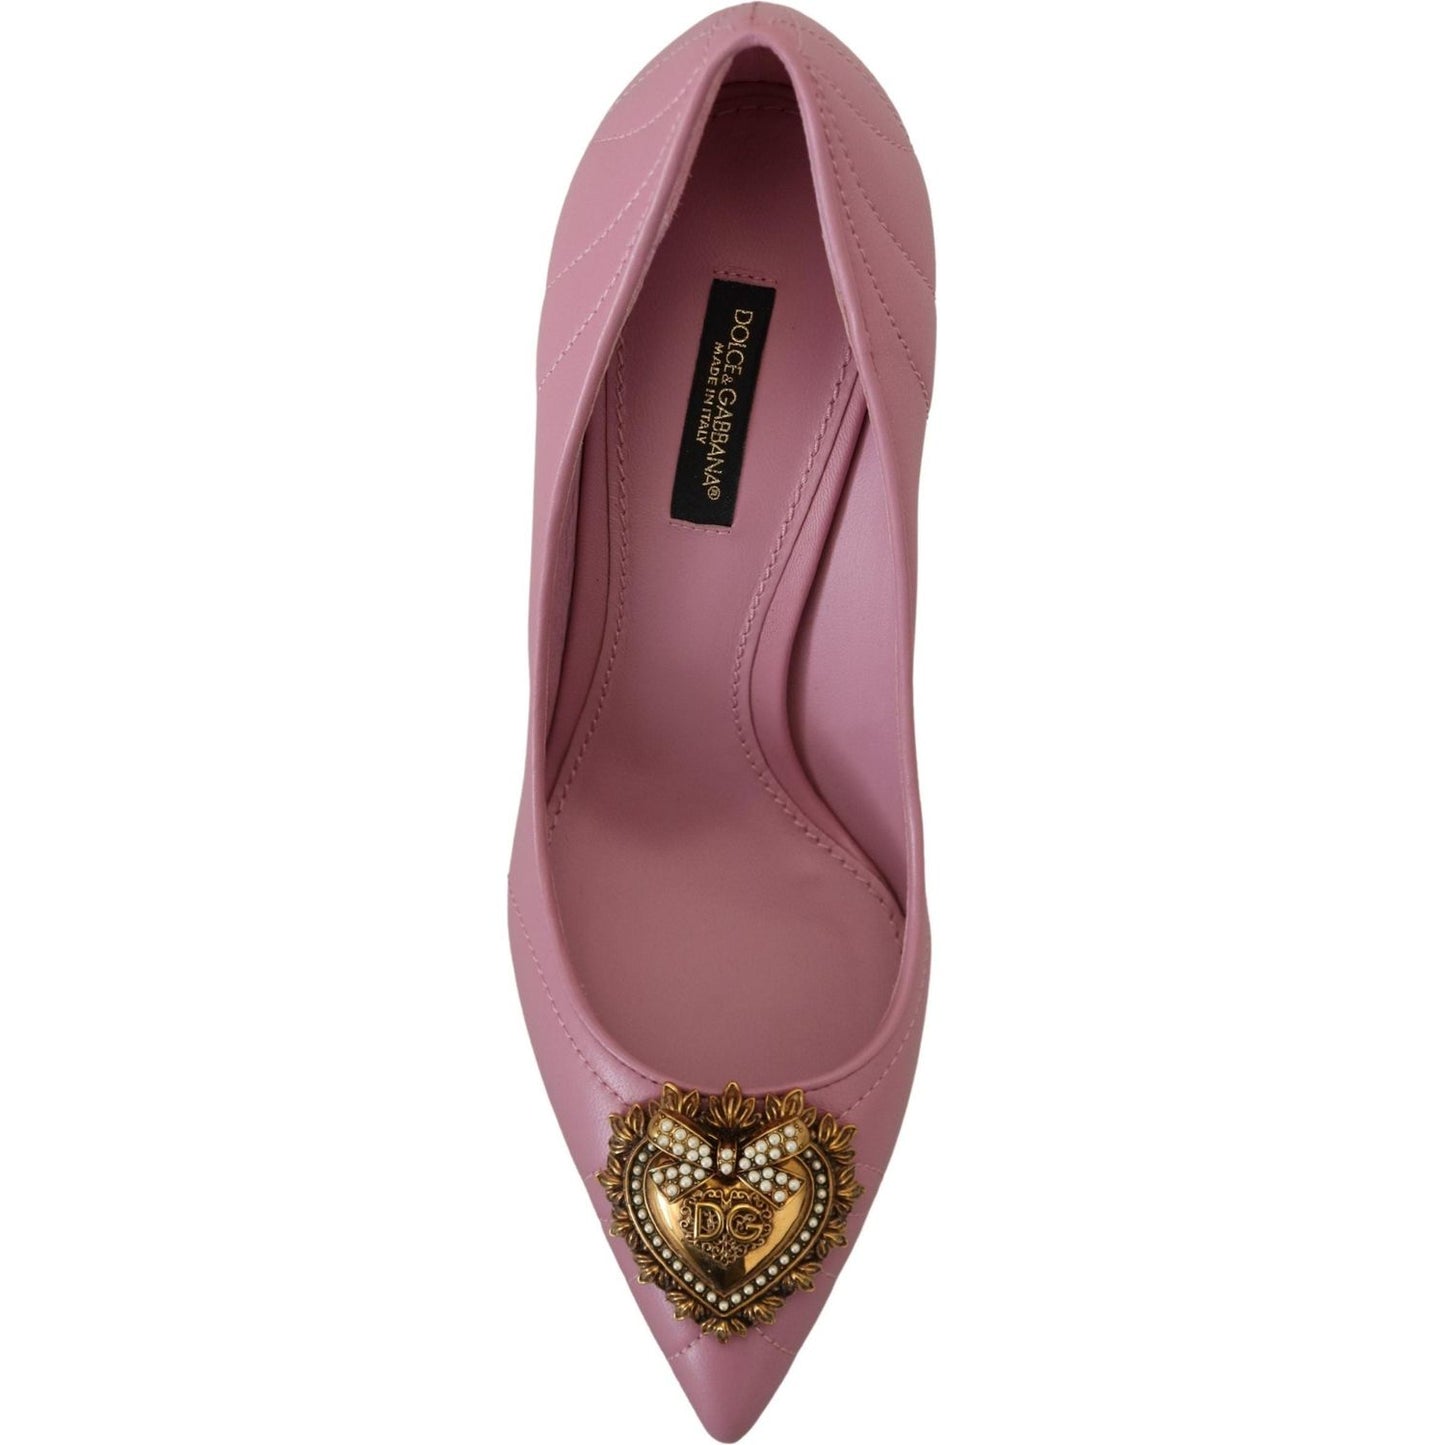 Dolce & Gabbana Devotion Leather Heels in Pink pink-leather-heart-devotion-heels-pumps-shoes